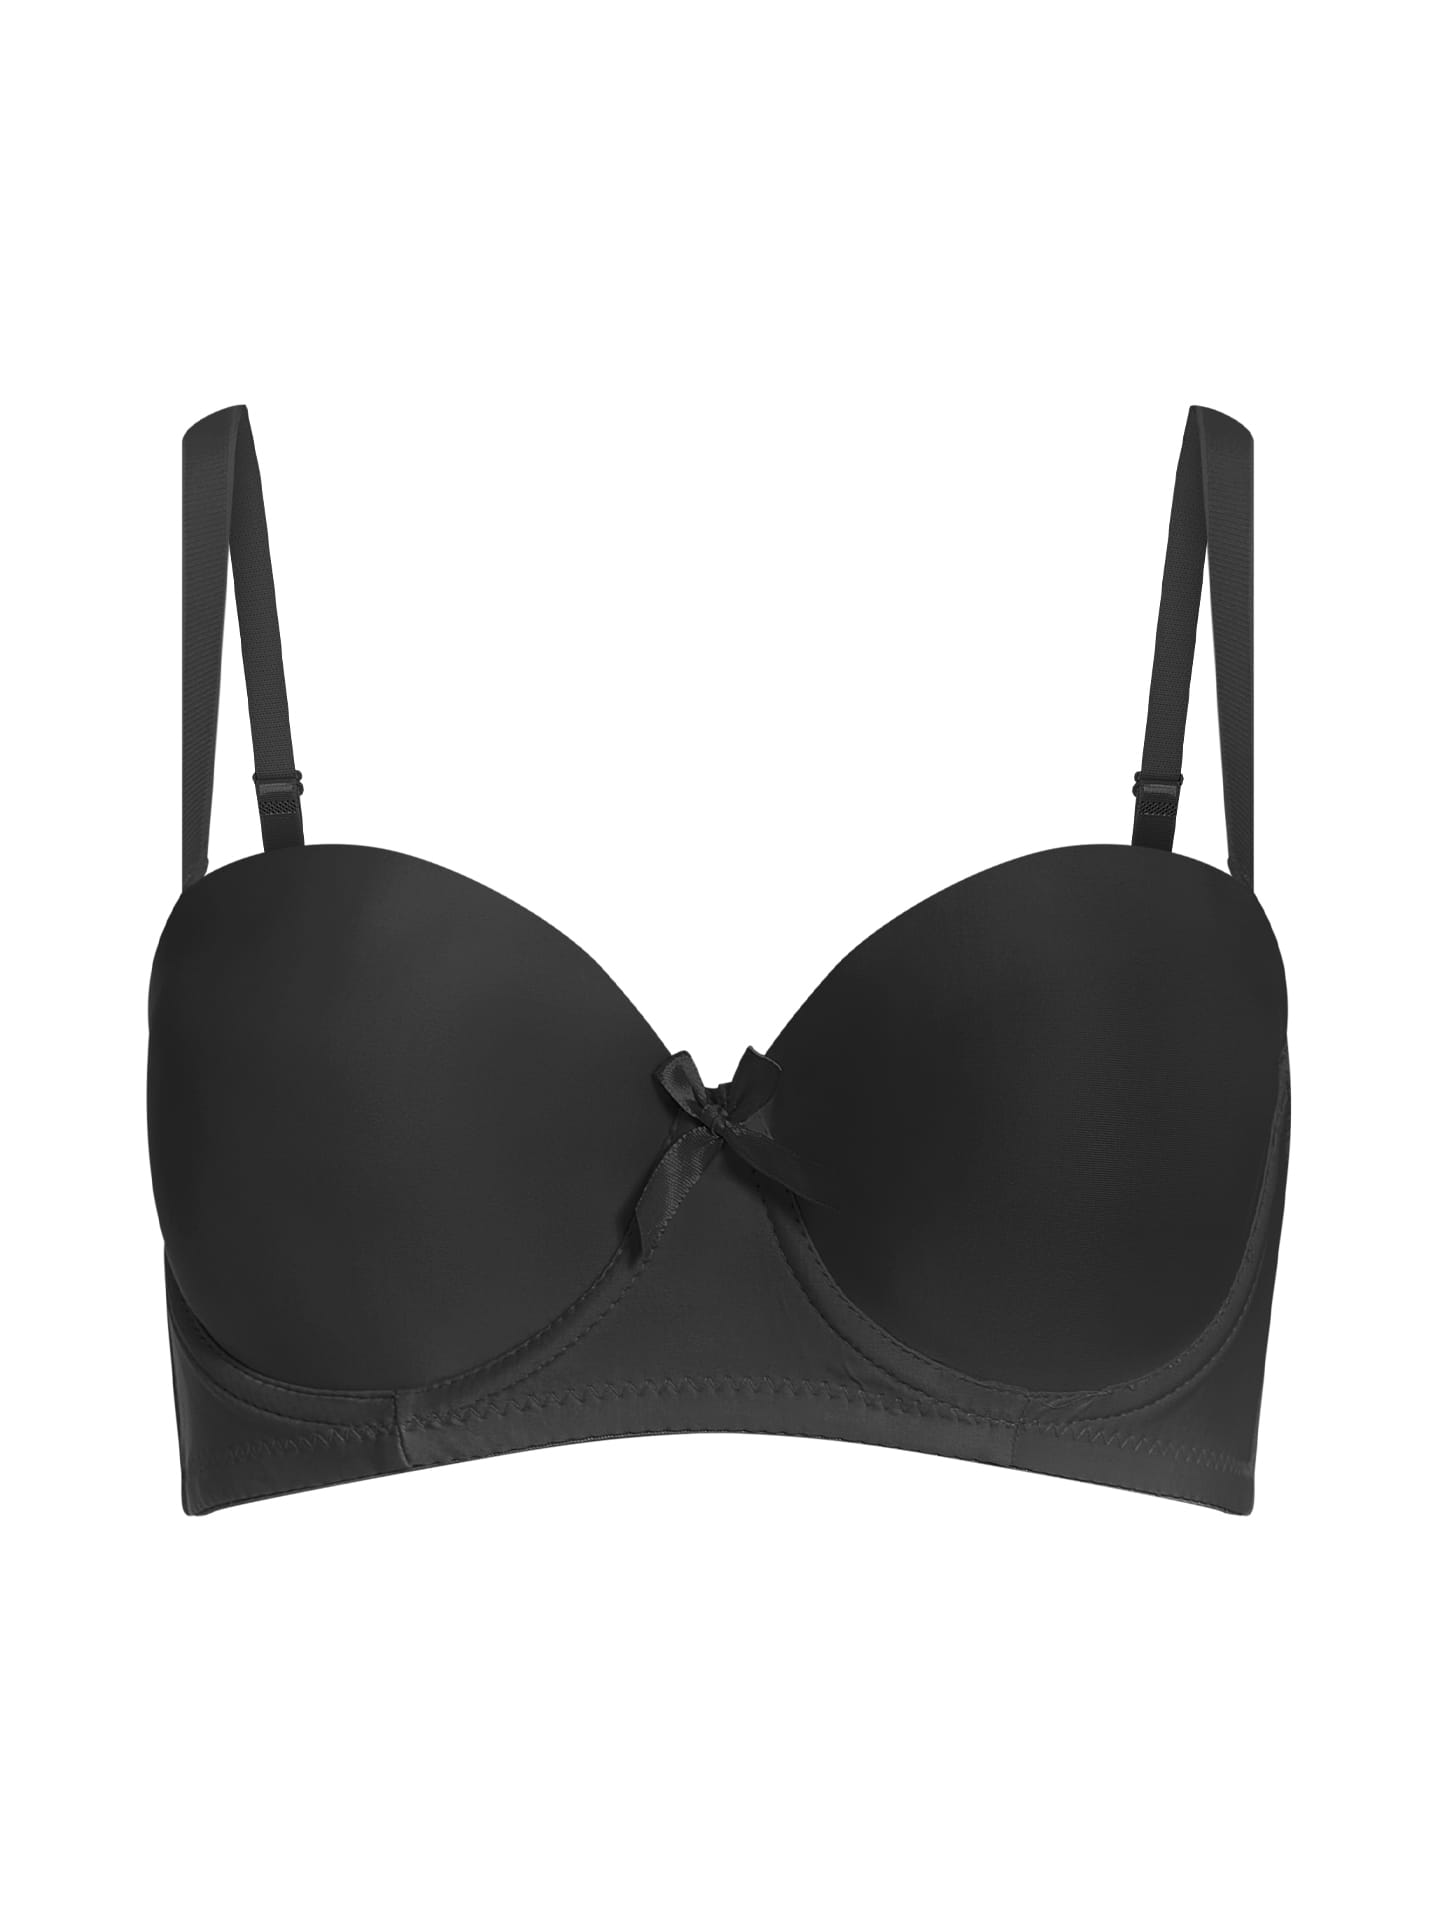 Strapless bra with detachable straps in black, 4.99€